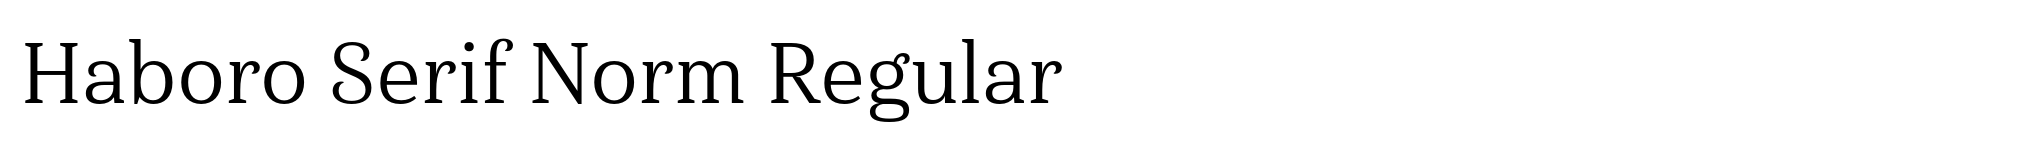 Haboro Serif Norm Regular image